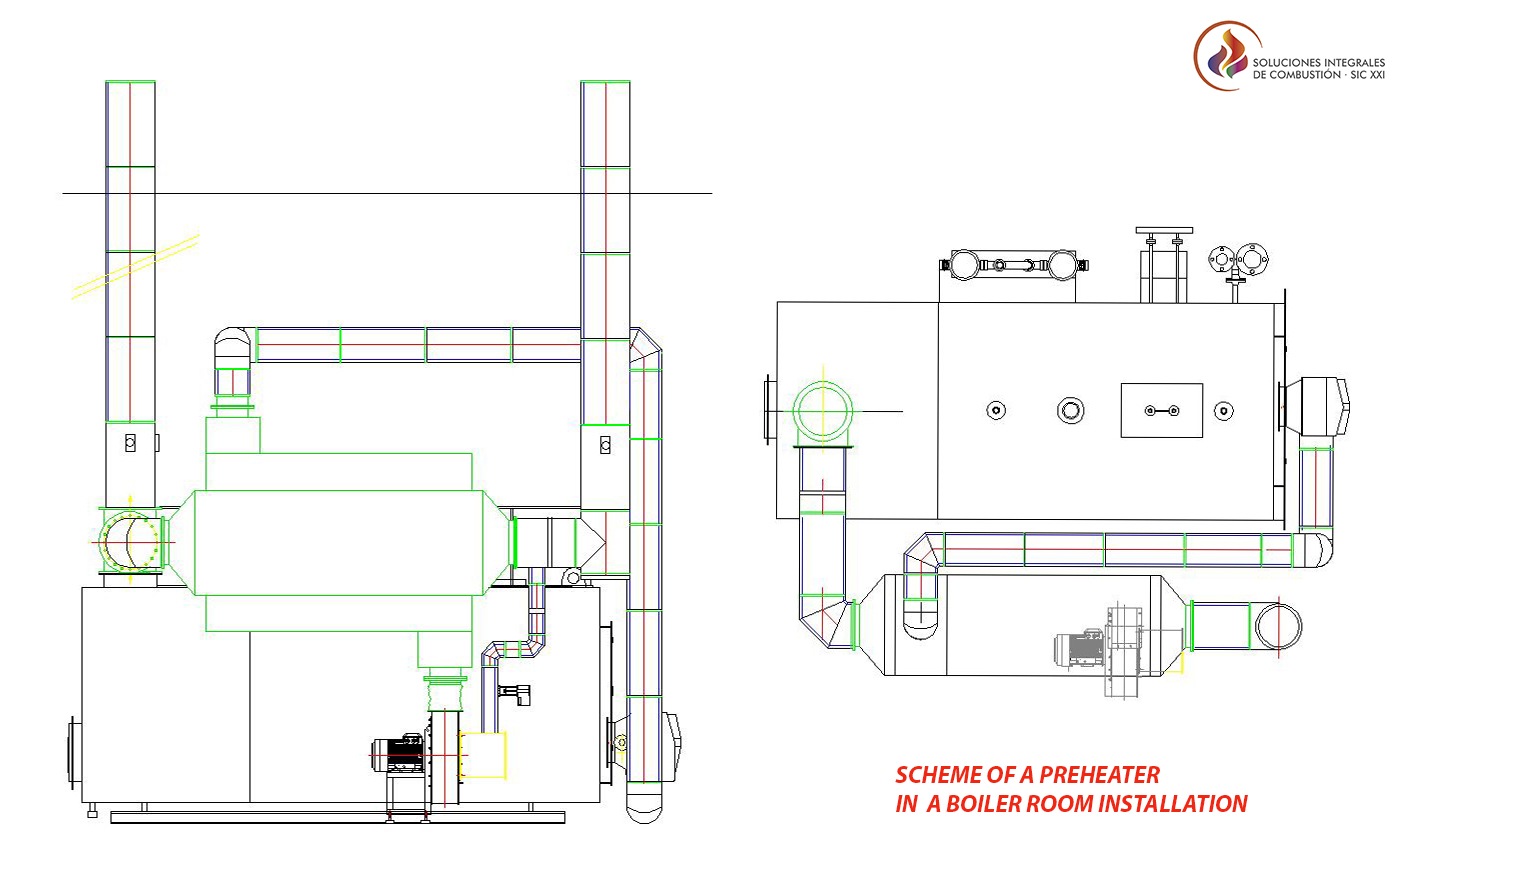 Scheme of a Preheater in a Boiler Installation. Soluciones Integrales de Combustion